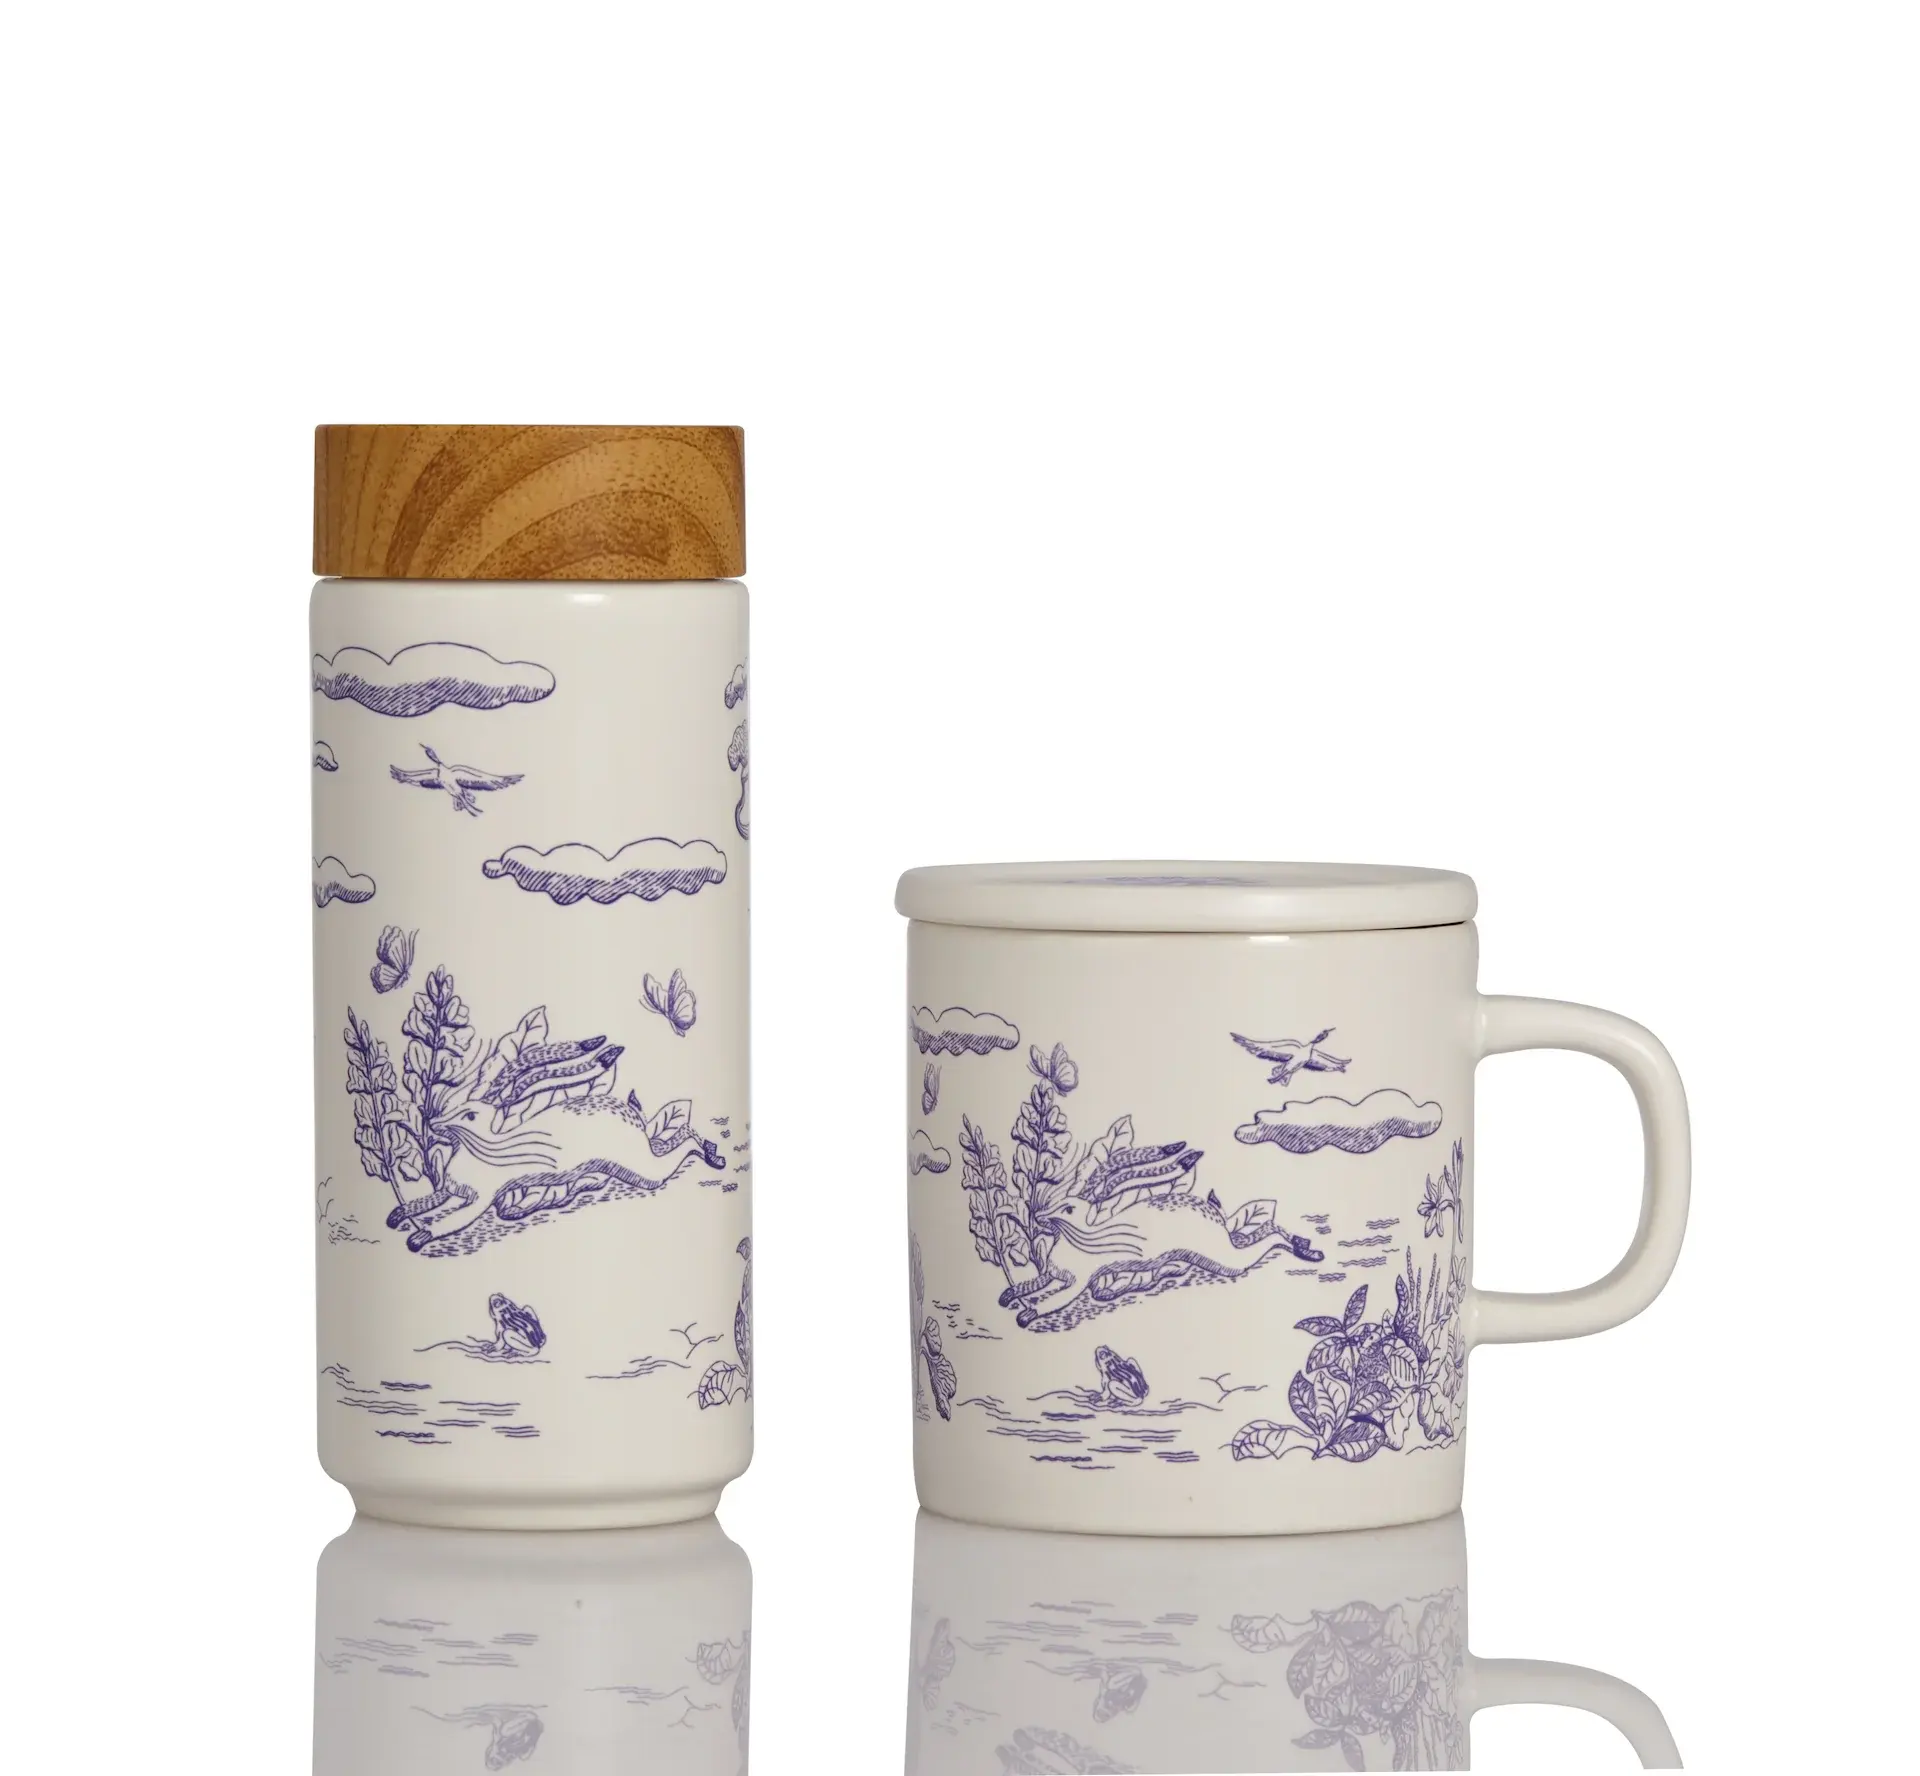 Acera Liven Magic Garden Travel Mug & Mug Gift Set Fabriqué avec de beaux motifs minimalistes